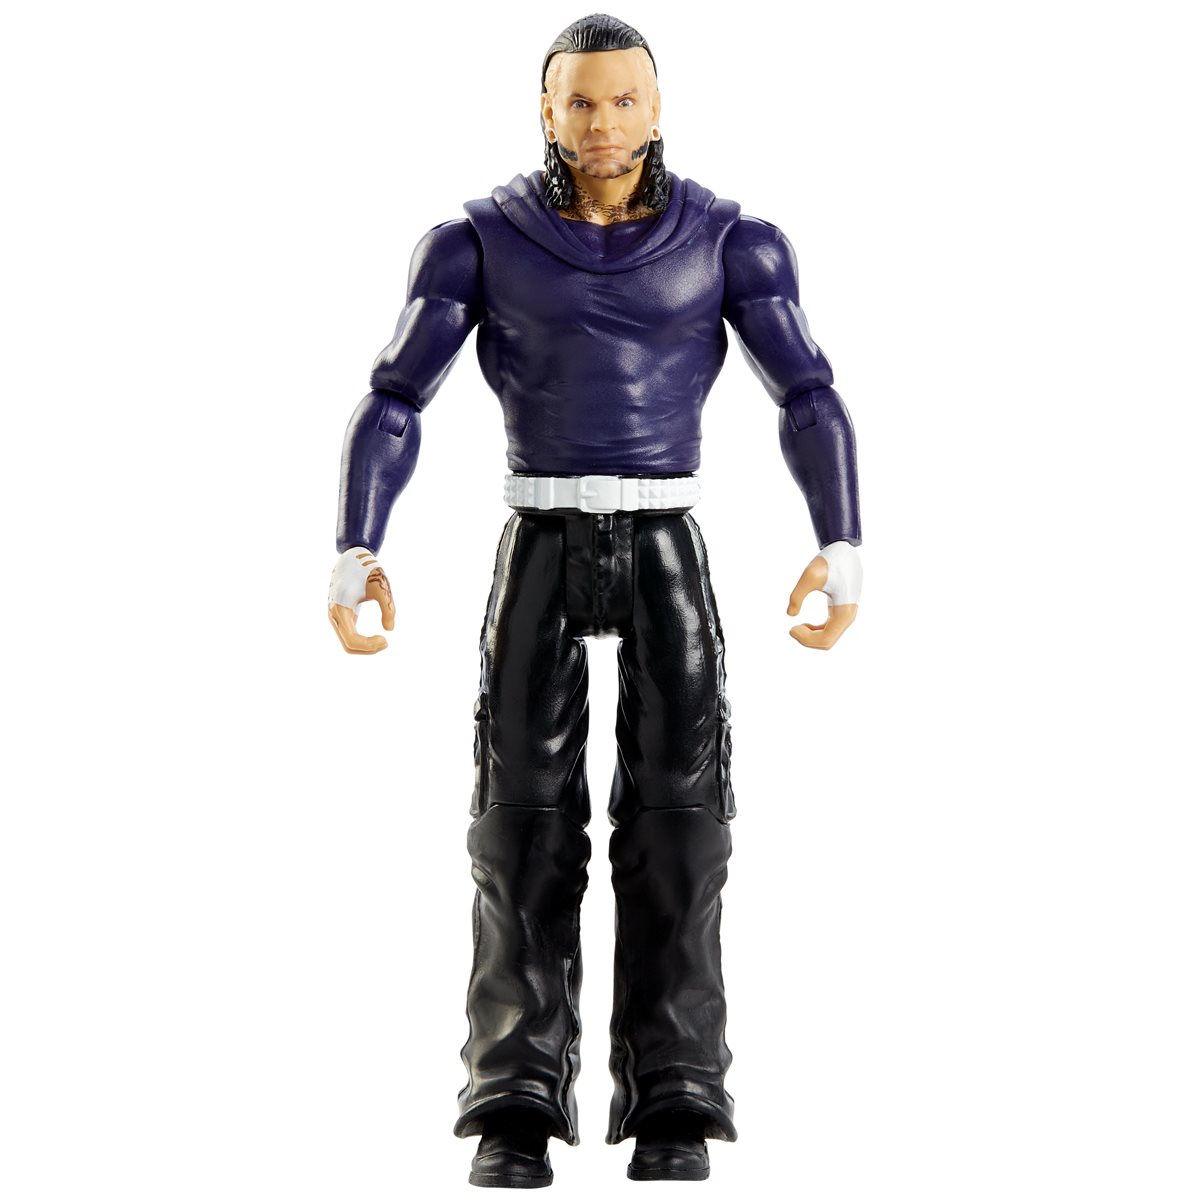 Actionfigur 15cm - Jeff Hardy Mattel WWE Basic Series #118 Wrestlingfigur